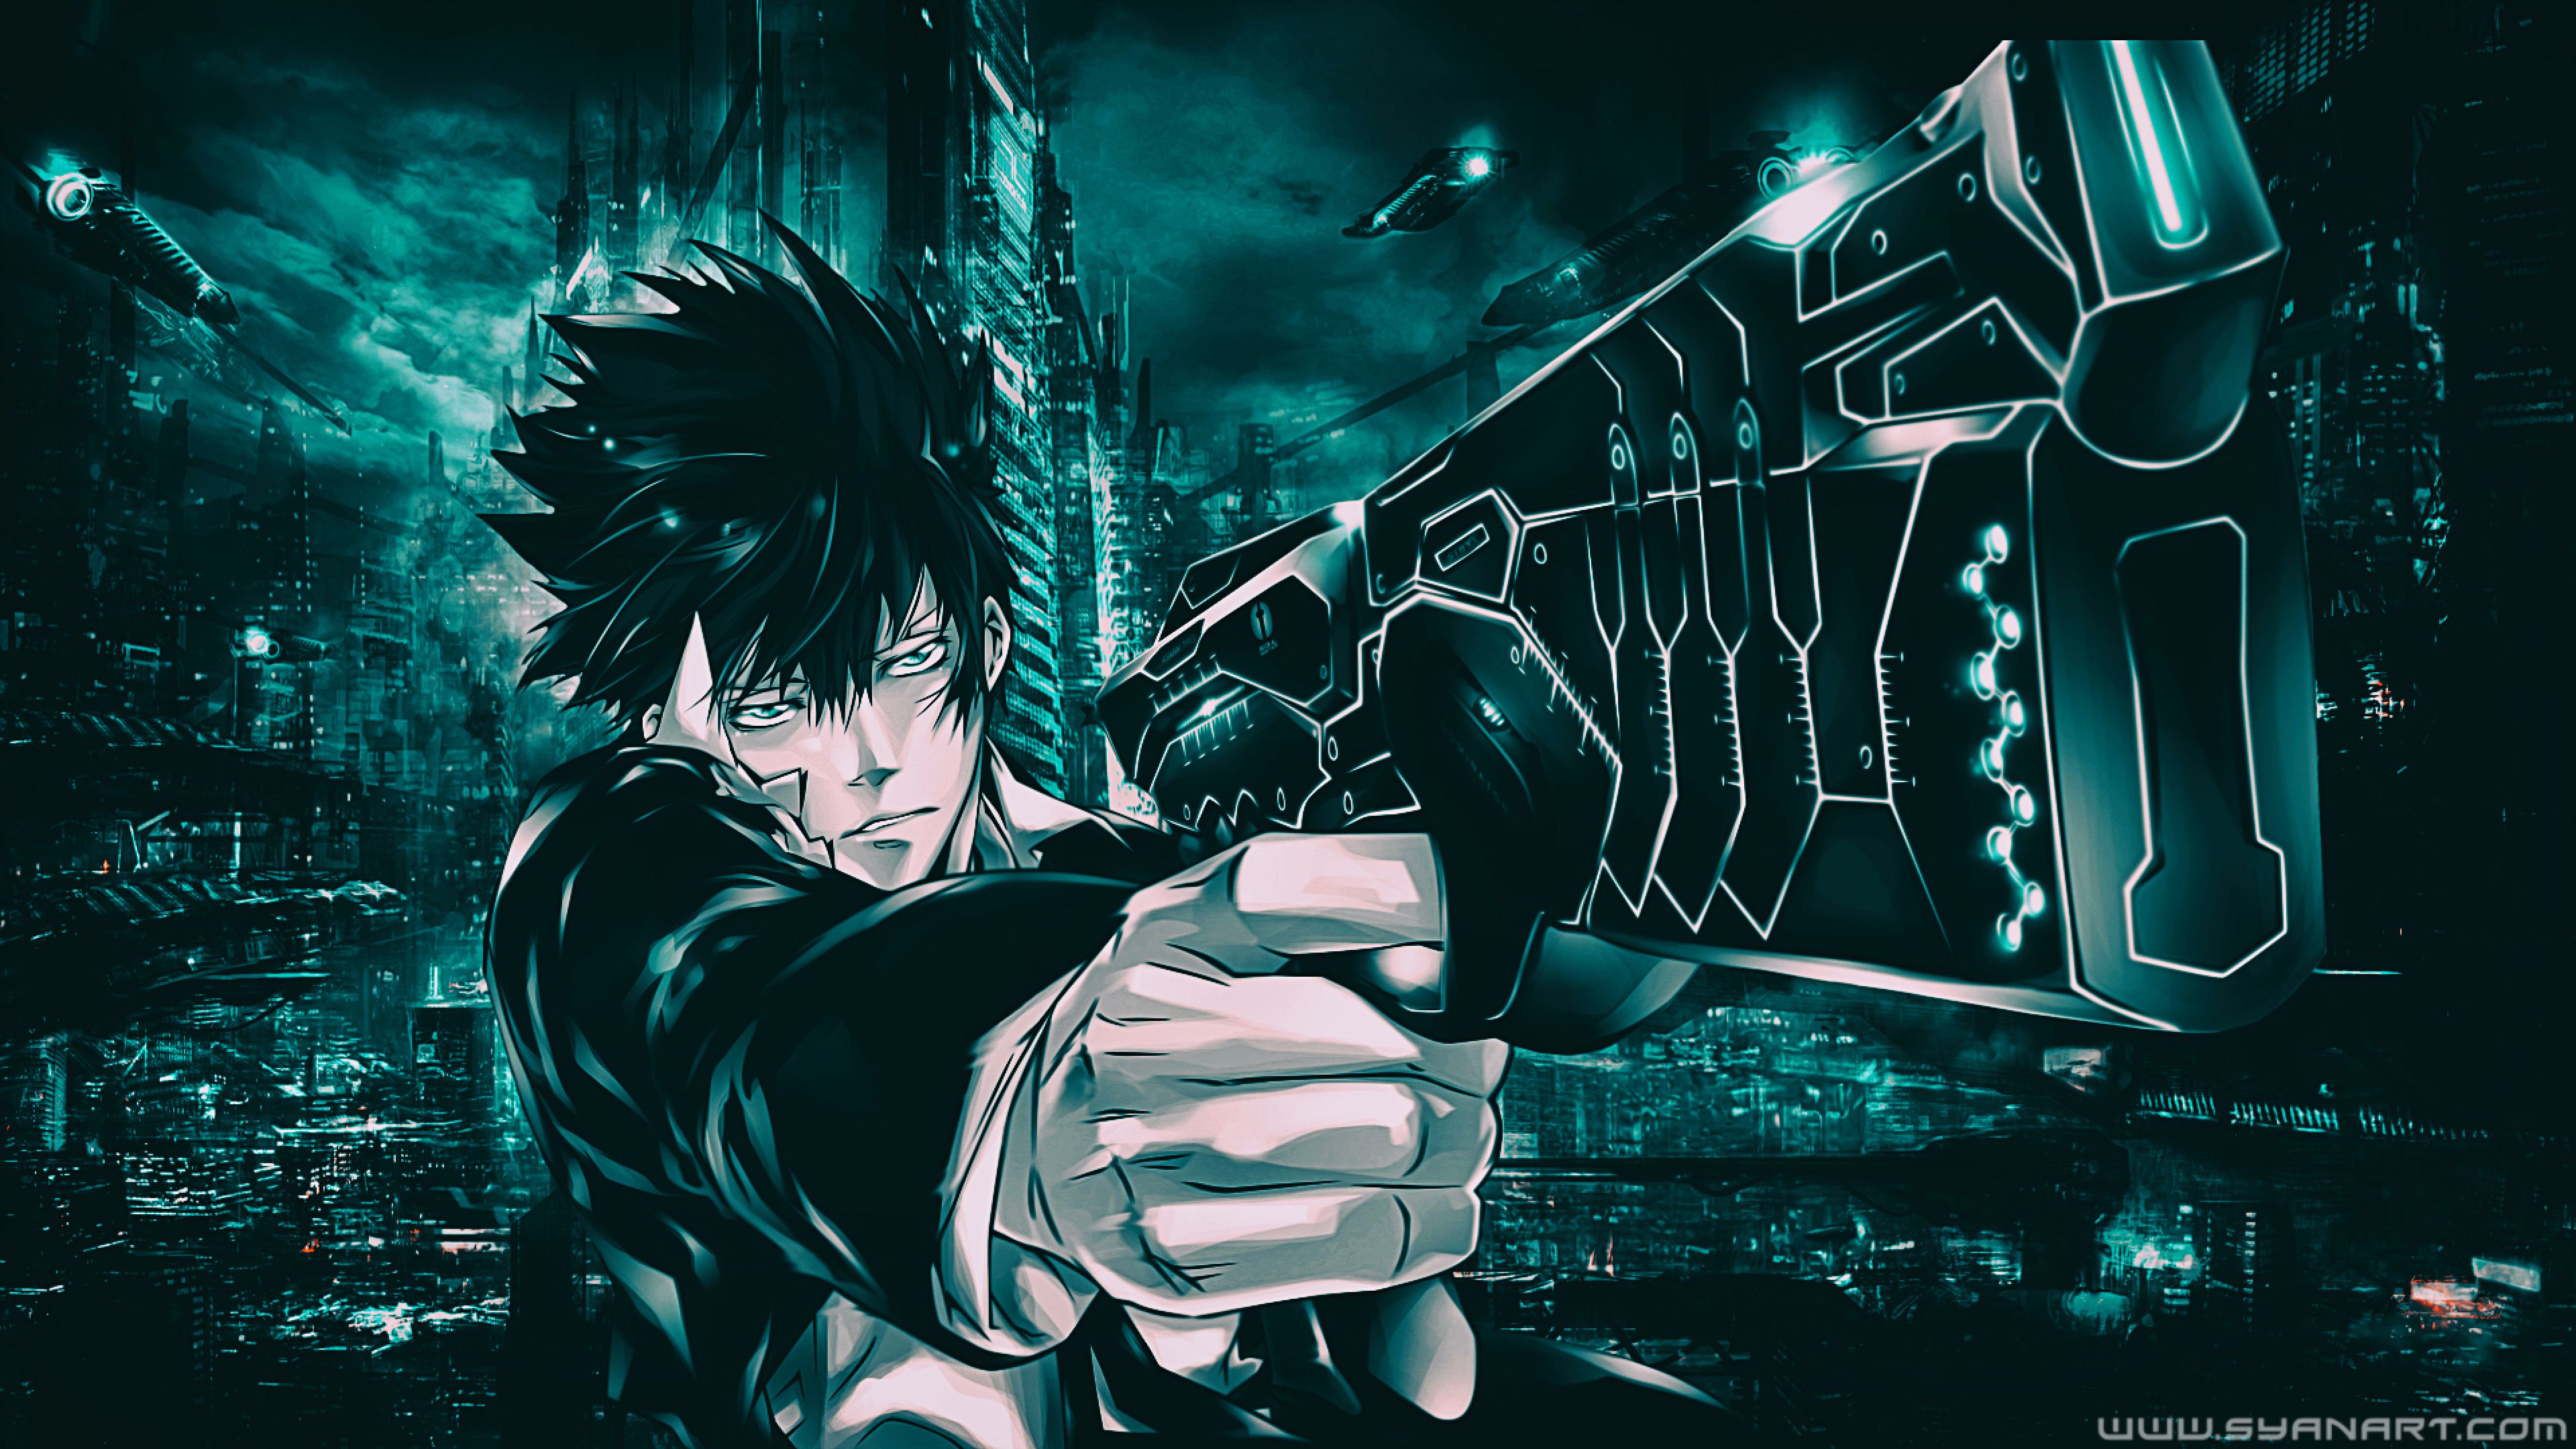 Shinya Kogami From Psycho Pass 4K Wallpaper, HD Anime 4K Wallpaper, Image, Photo And Background